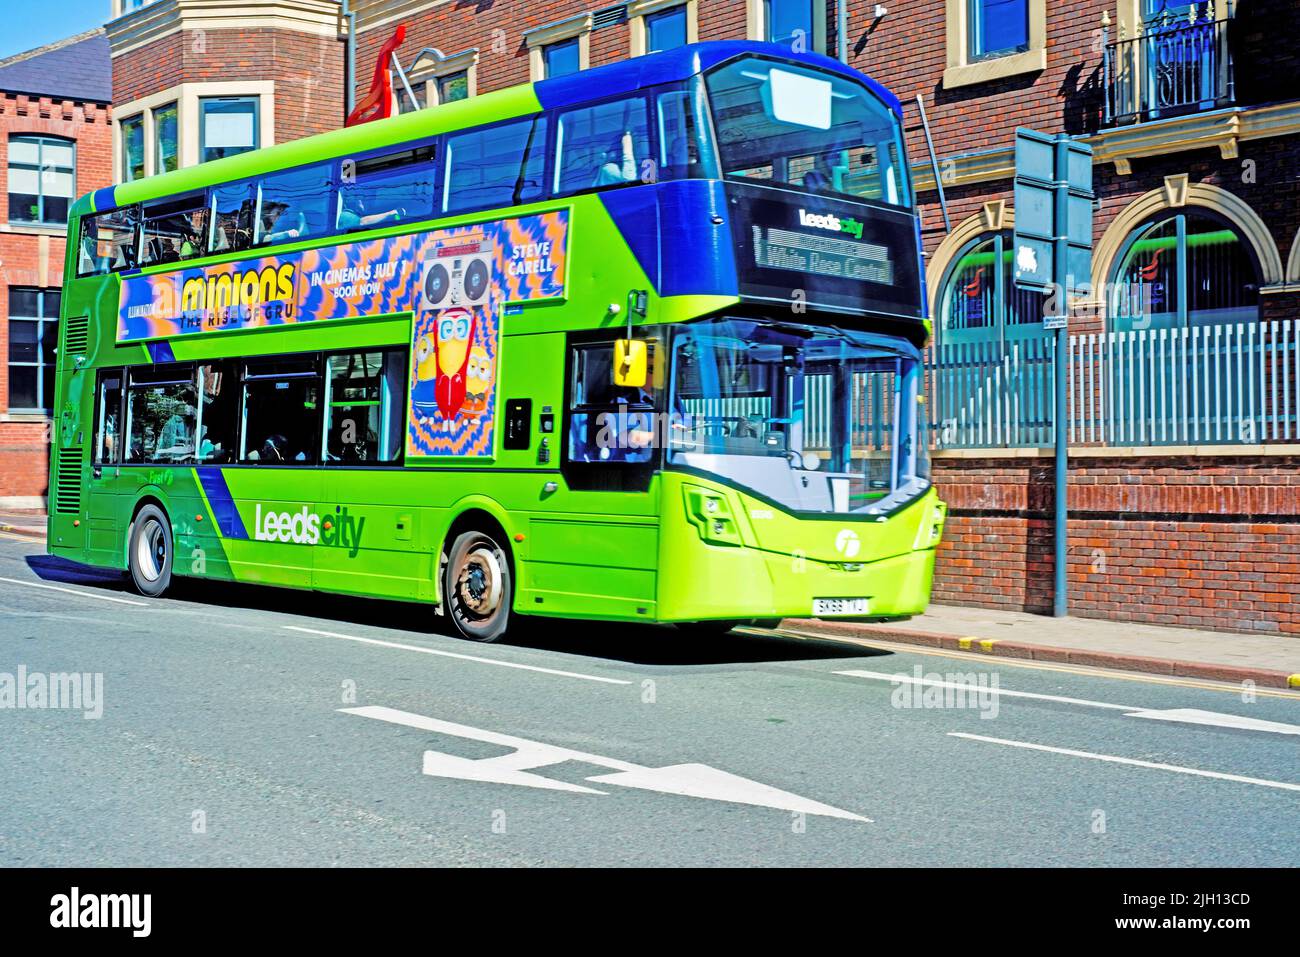 Leeds City Bus, Leeds, England Stock Photo